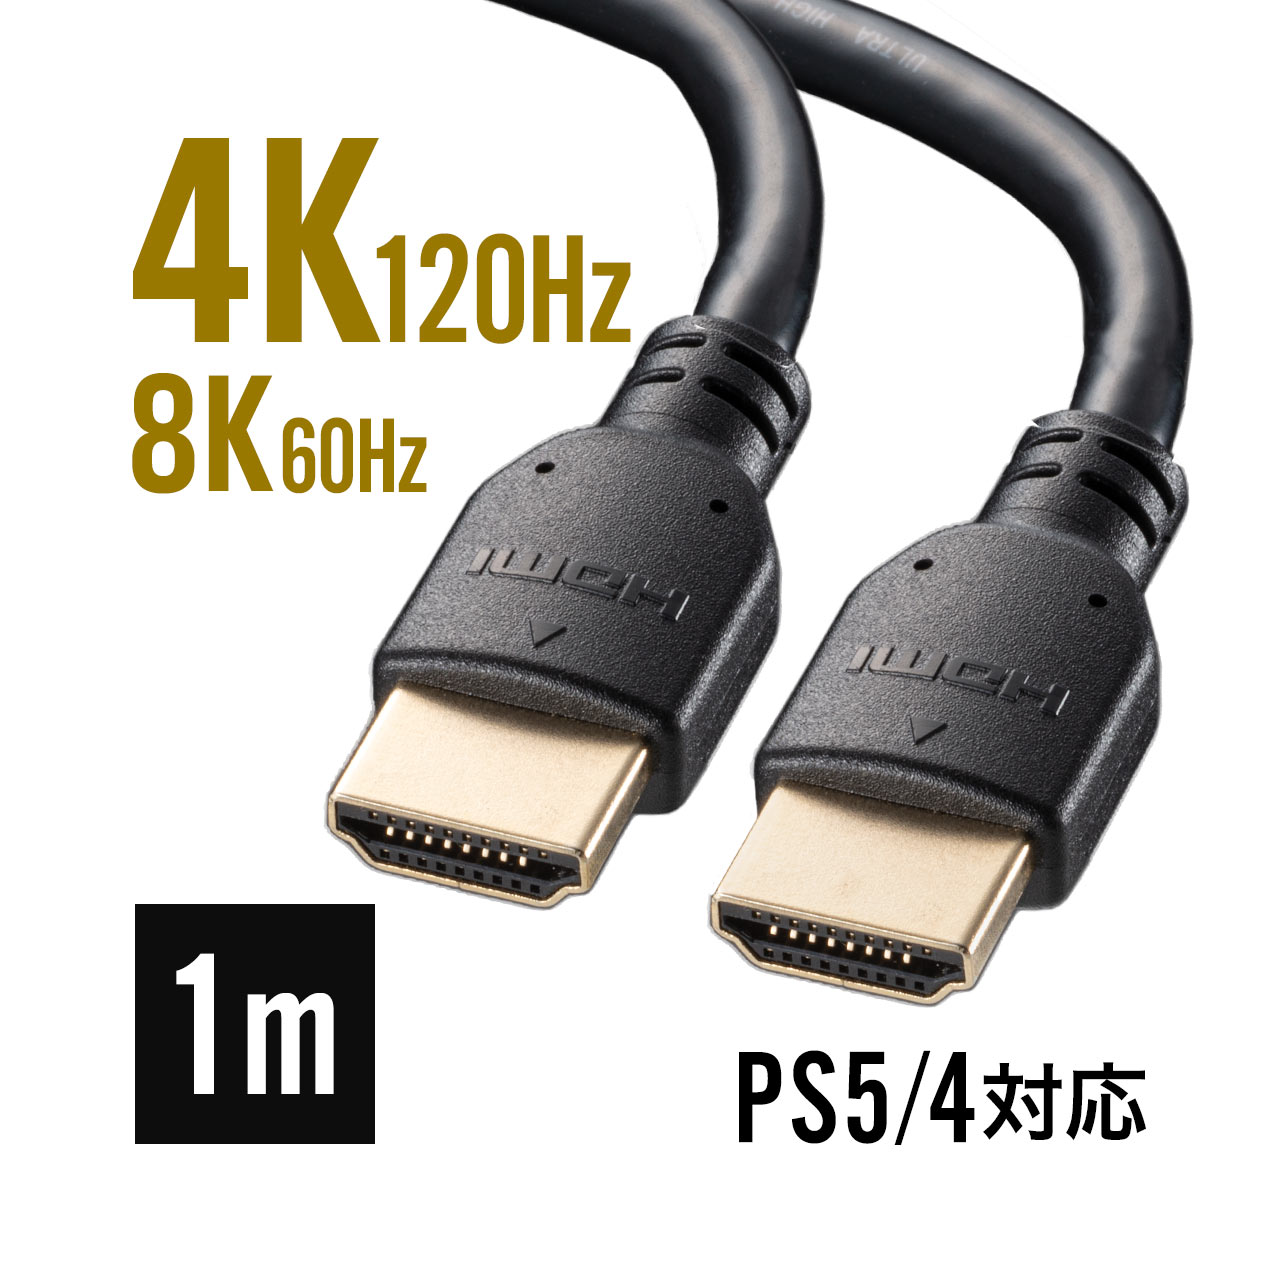 HDMIケーブル ウルトラハイスピード 8K/60Hz 4K/120Hz 対応 HDMI2.1 DynamicHDR ゲームモード VRR対応 eARC対応 ARC対応 PS5 PS4対応 1m 500-HD028-10